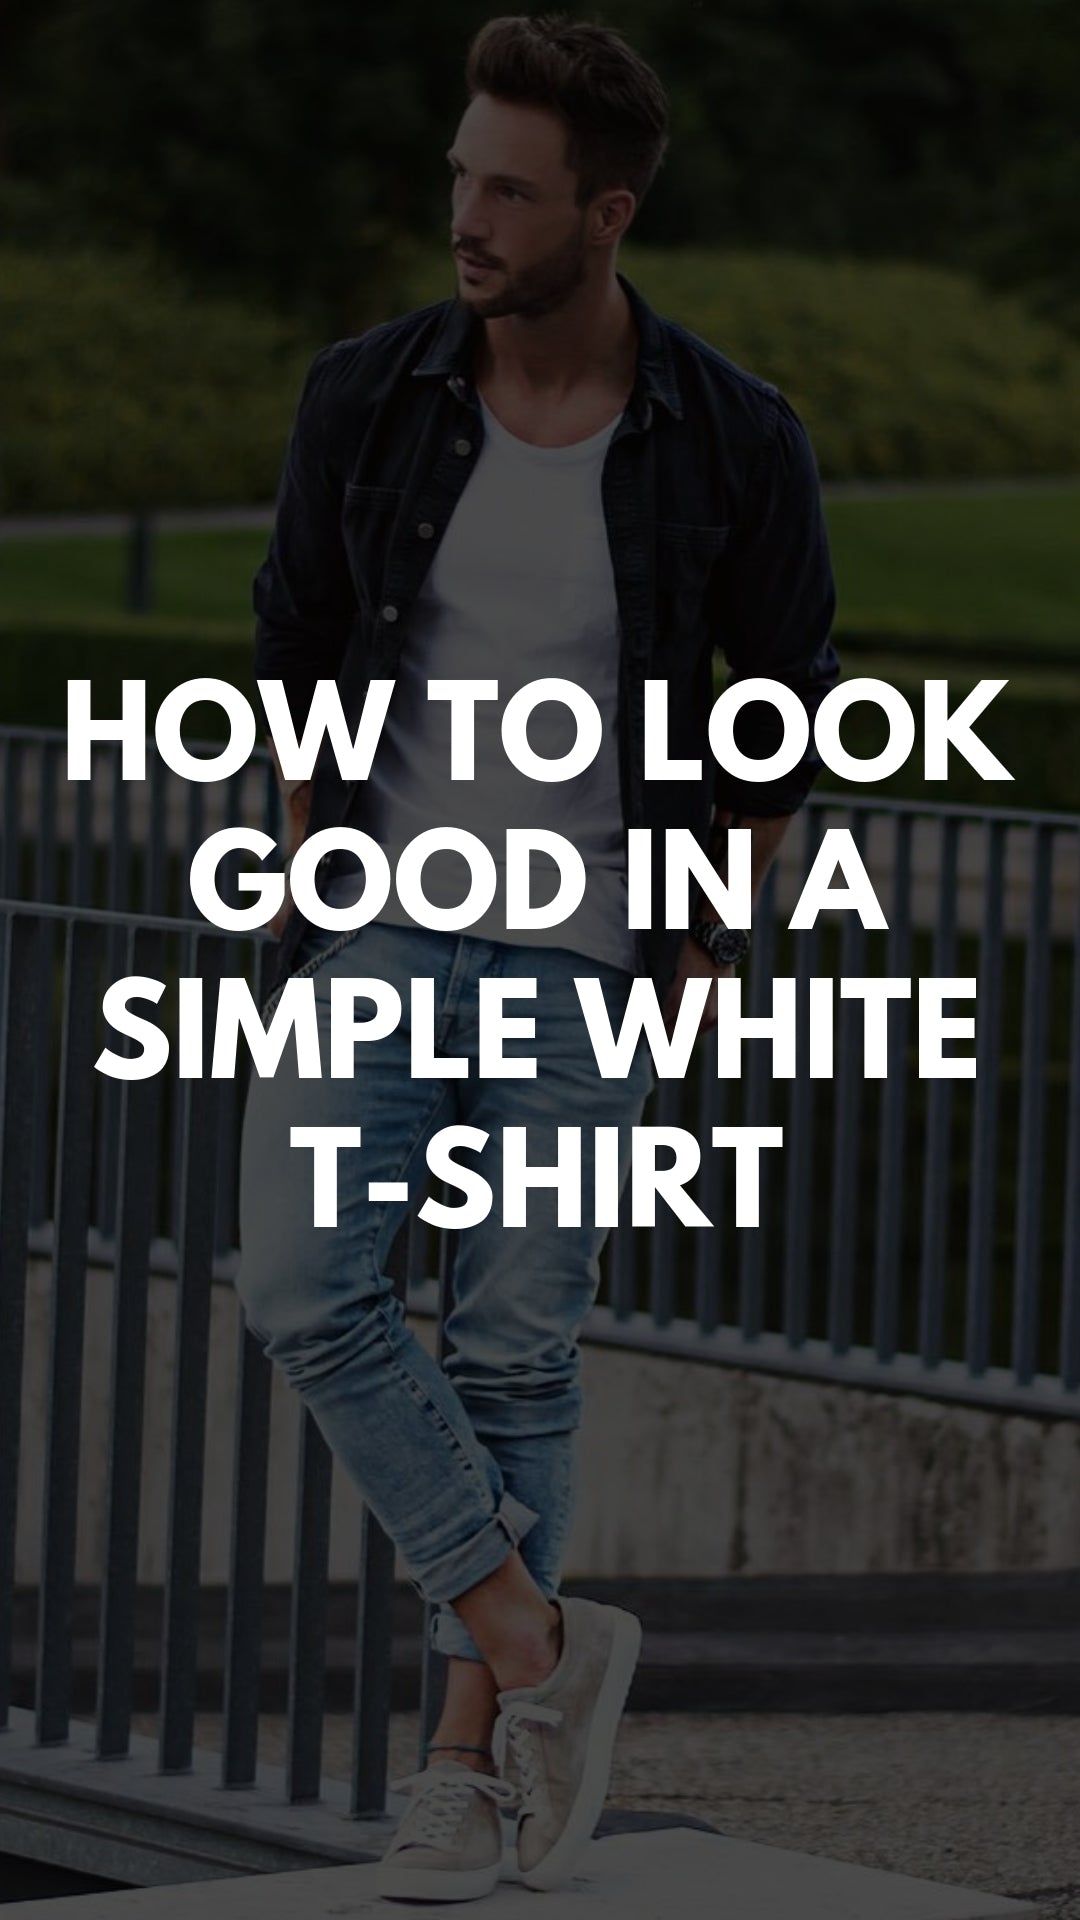 White t-shirt outfits for men. #whitetshirt #outfits #mensfashion #streetstyle